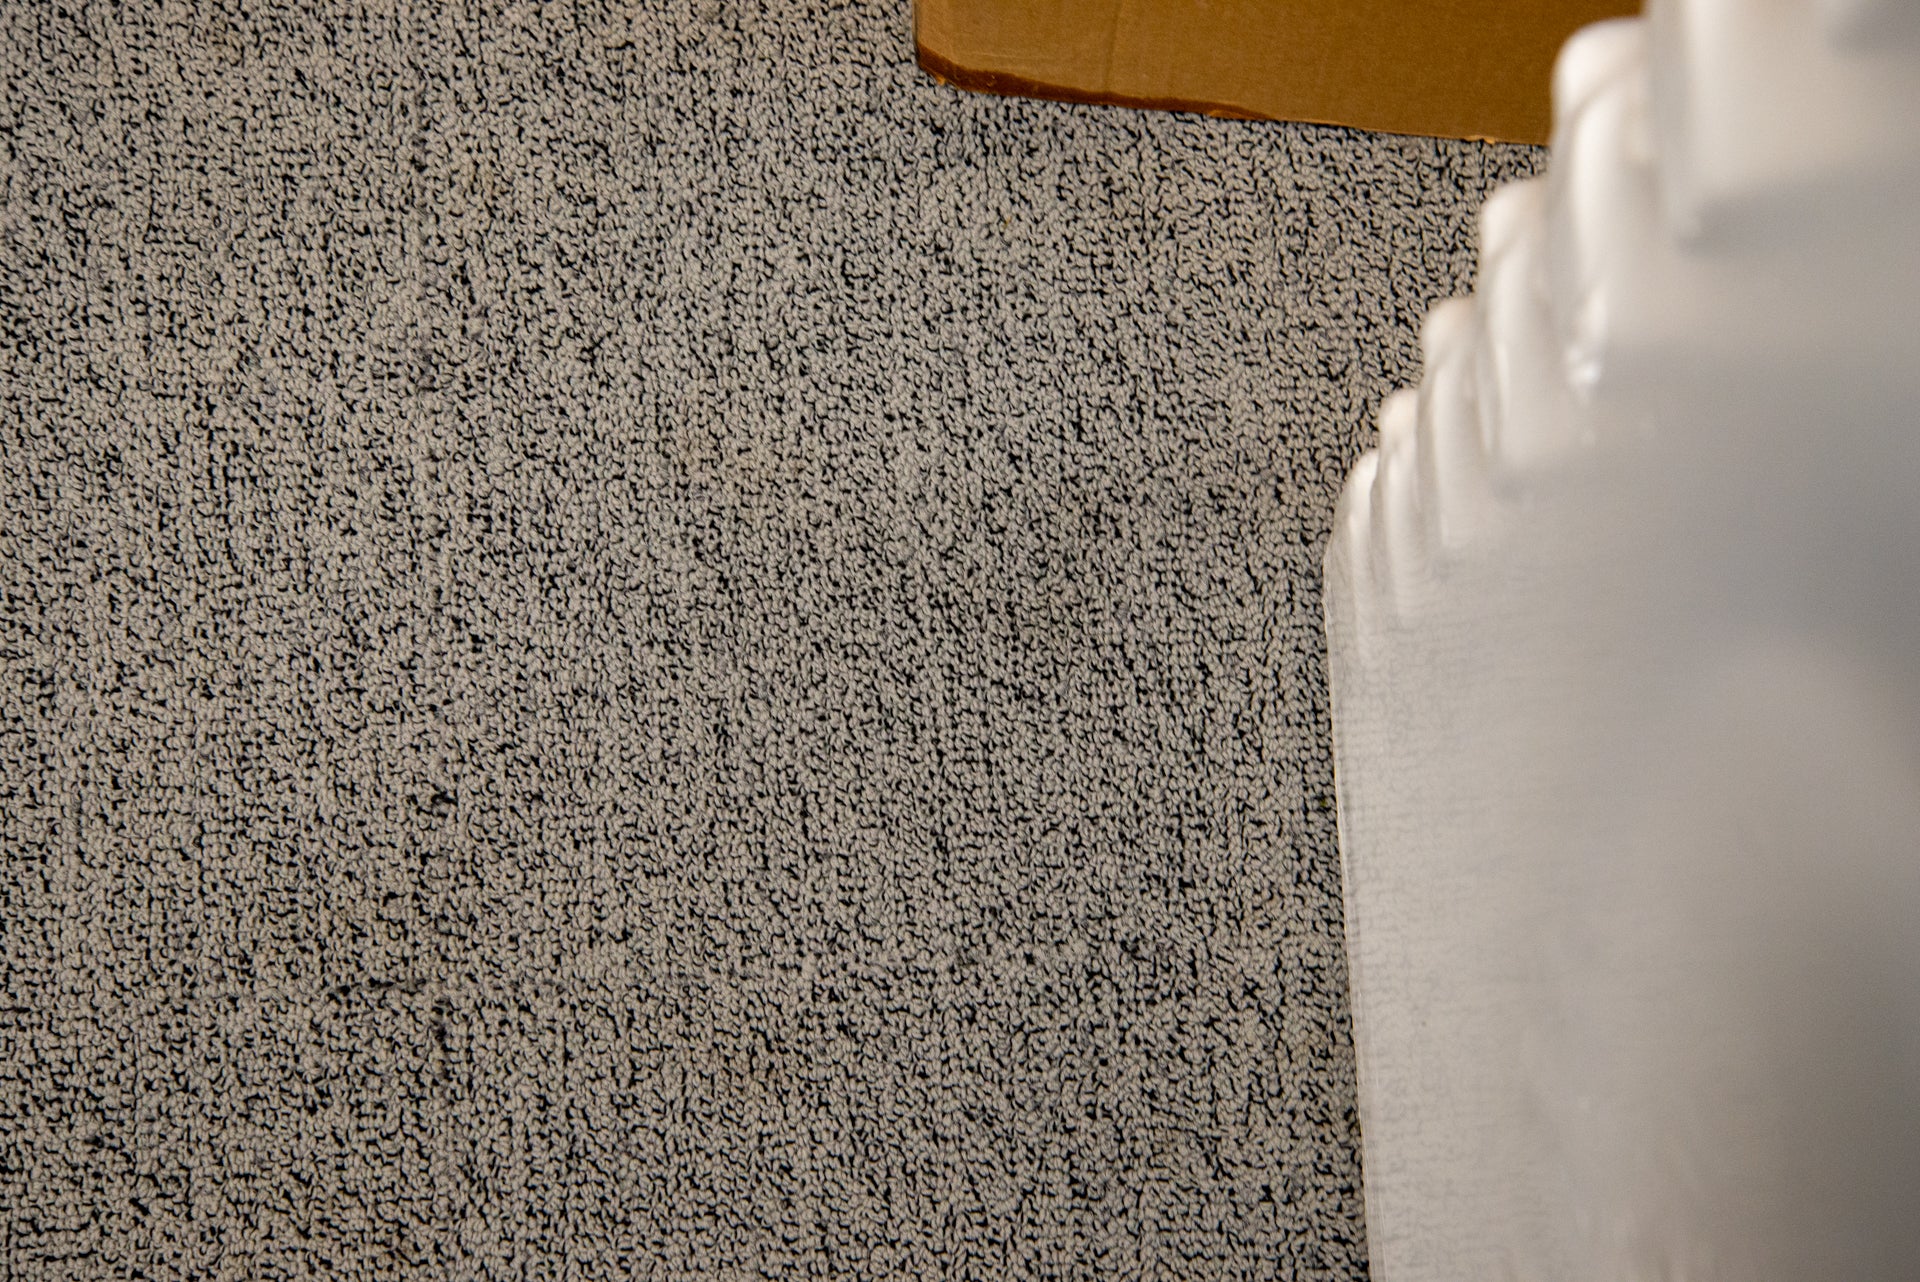 Vax Platinum SmartWash Carpet Cleaner close up mud after cleaning